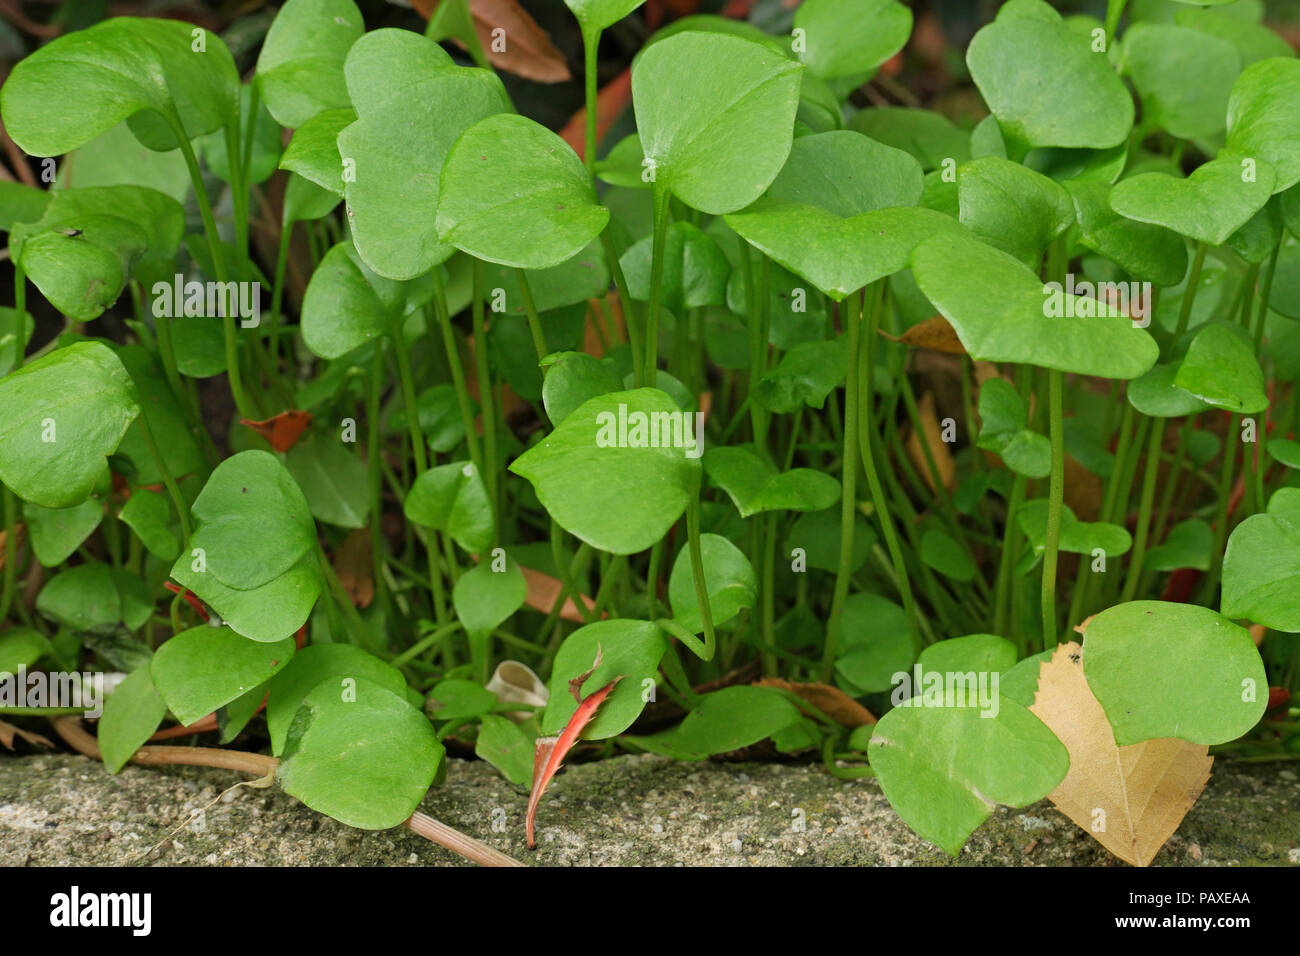 Claytonia perfoliata (Winterportulak) (Indian Lettuce) (claytonia perfoliée) Stock Photo